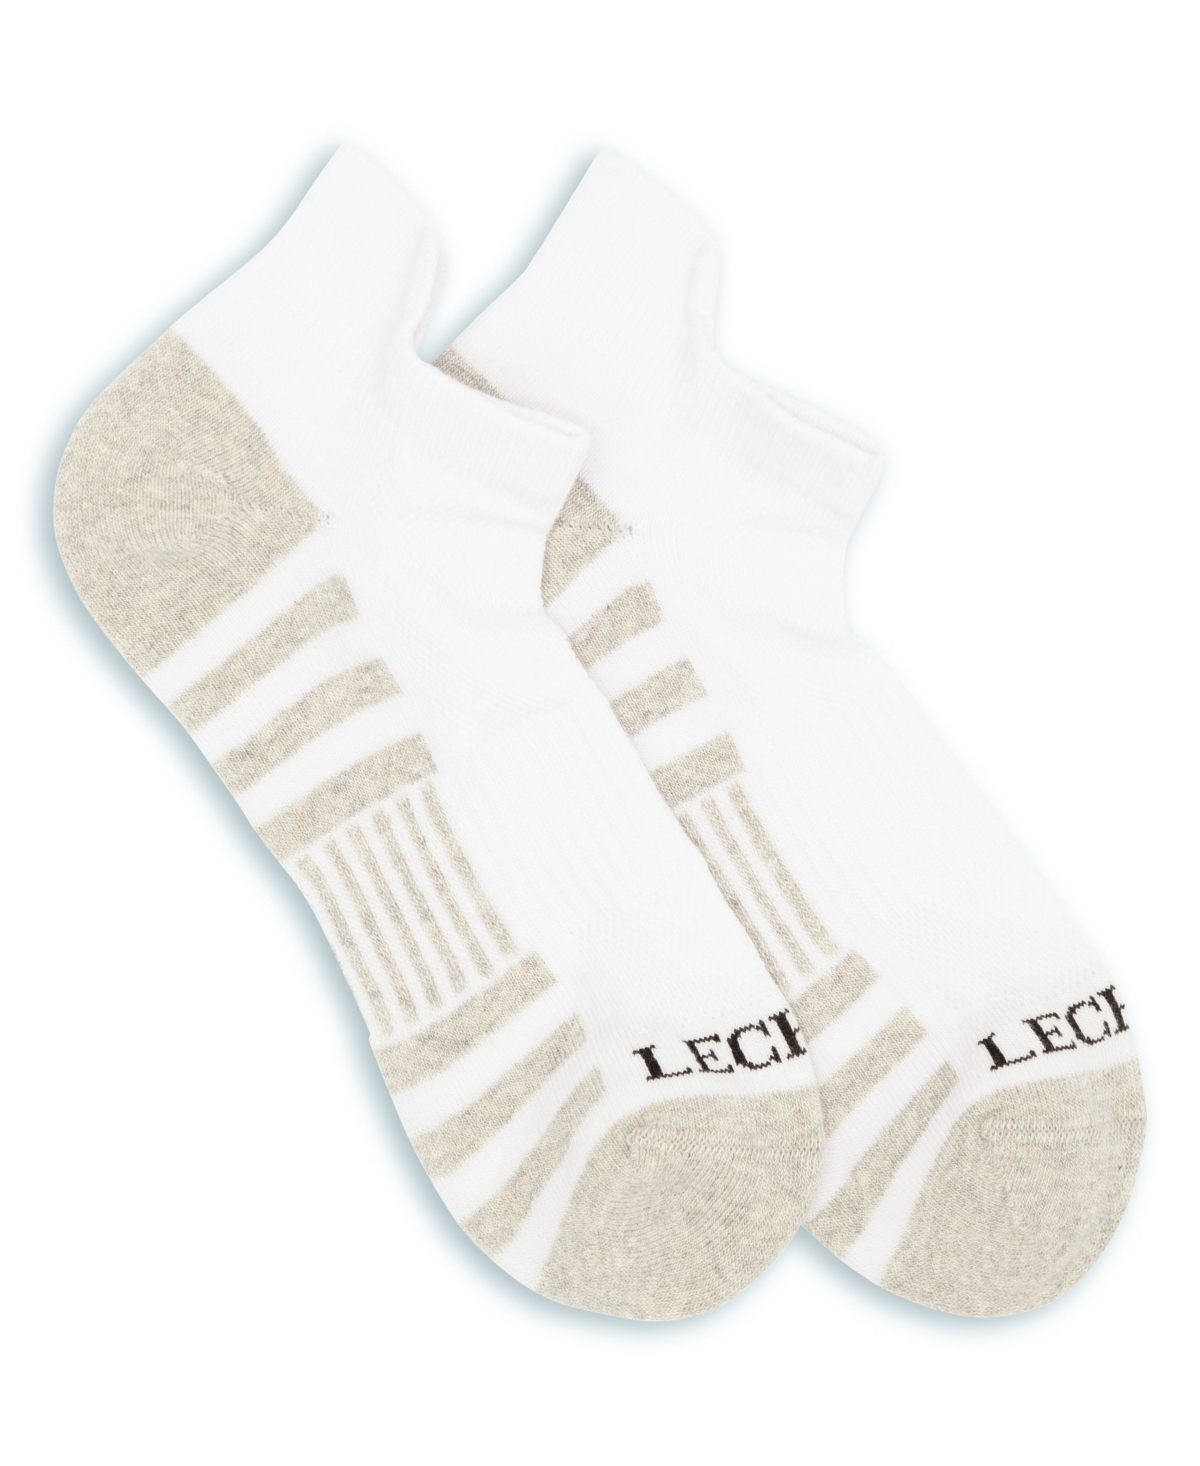 Unisex European Made Classic Sport Low-Cut Socks - White